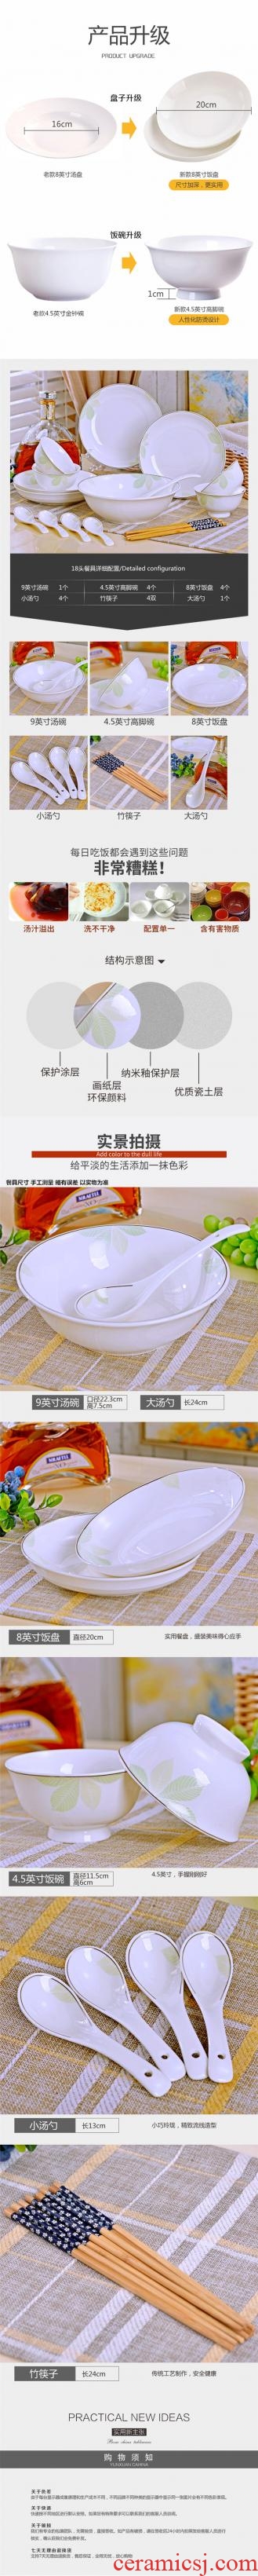 Jingdezhen dishes suit household ceramics tableware 4 people eat bread and butter plate soup bowl combine simple bowl chopsticks sets